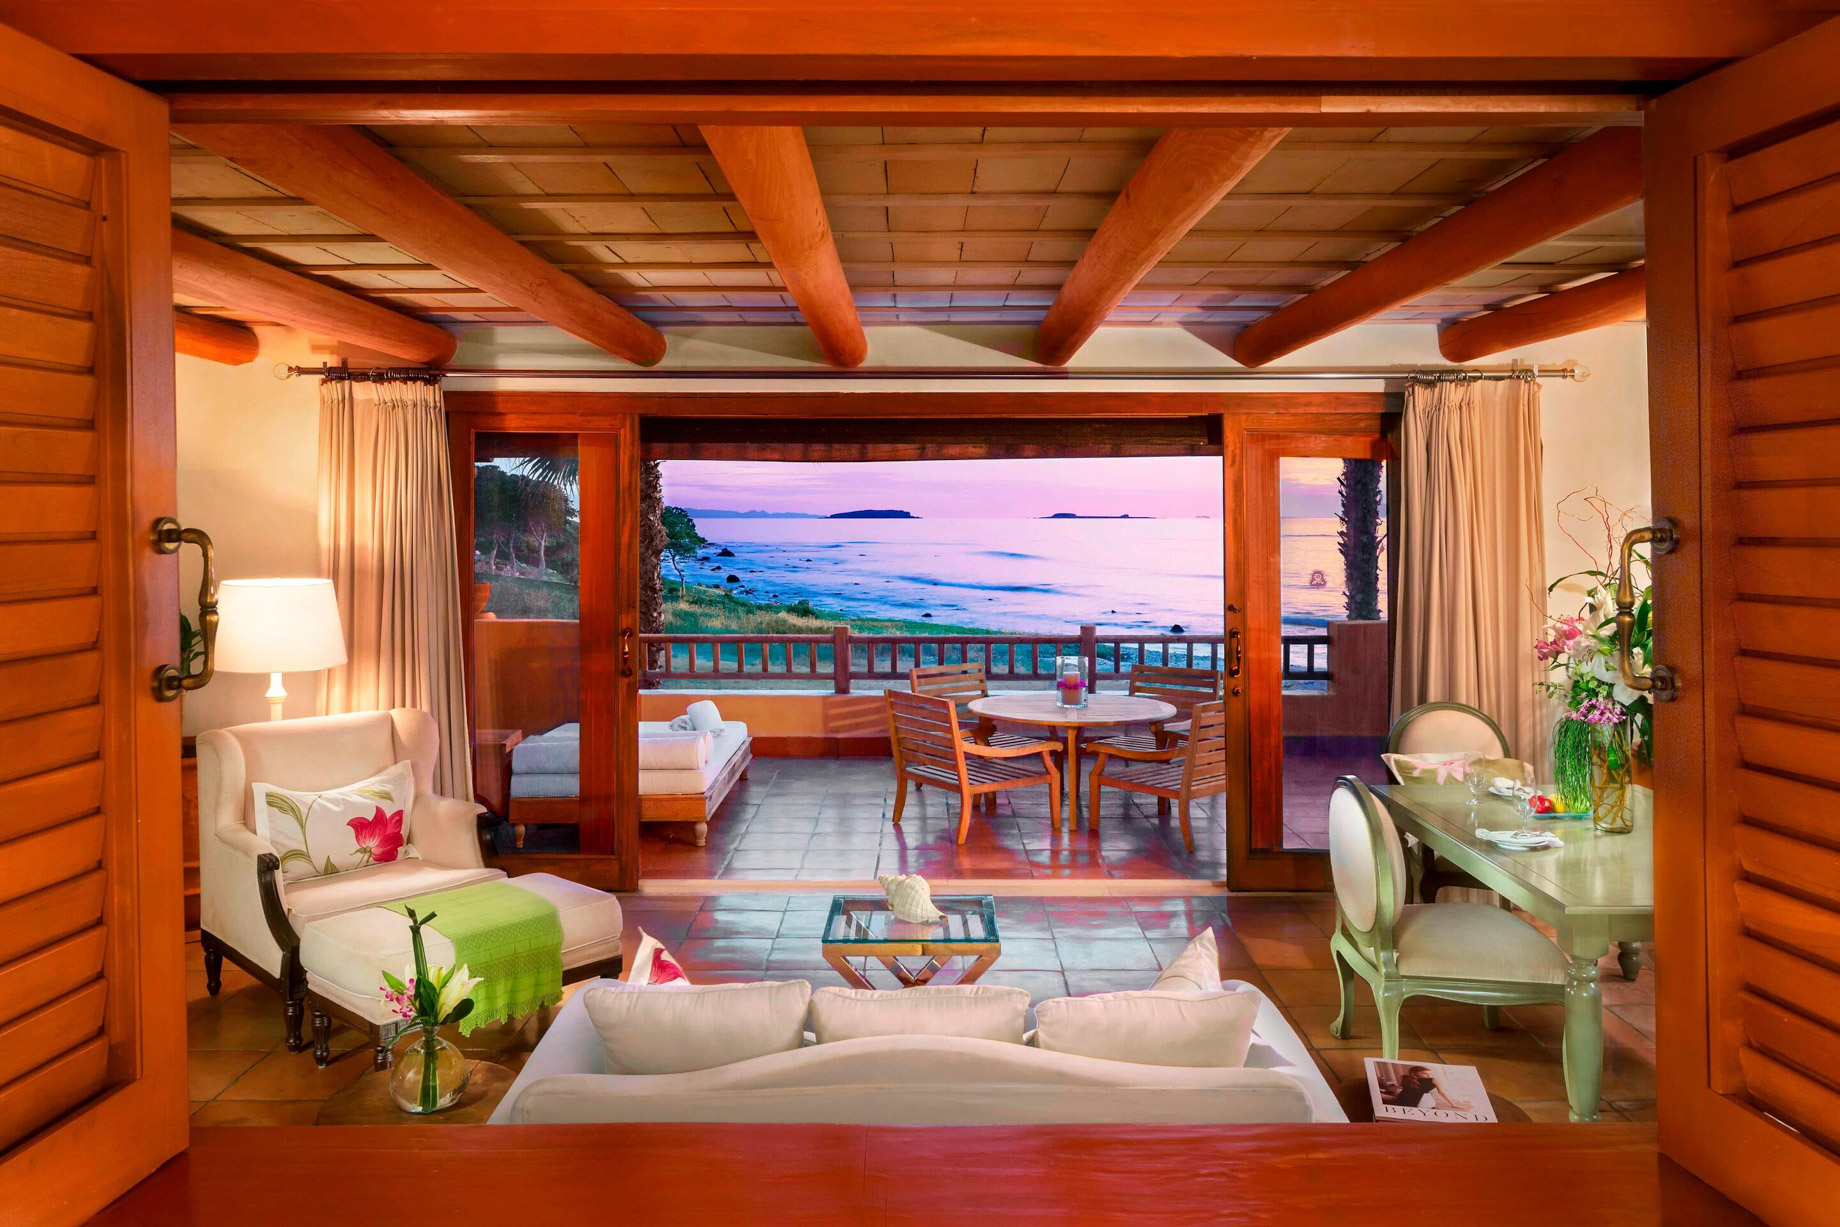 The St. Regis Punta Mita Resort – Nayarit, Mexico – Deluxe Suite Ocean View Living Room Sunset